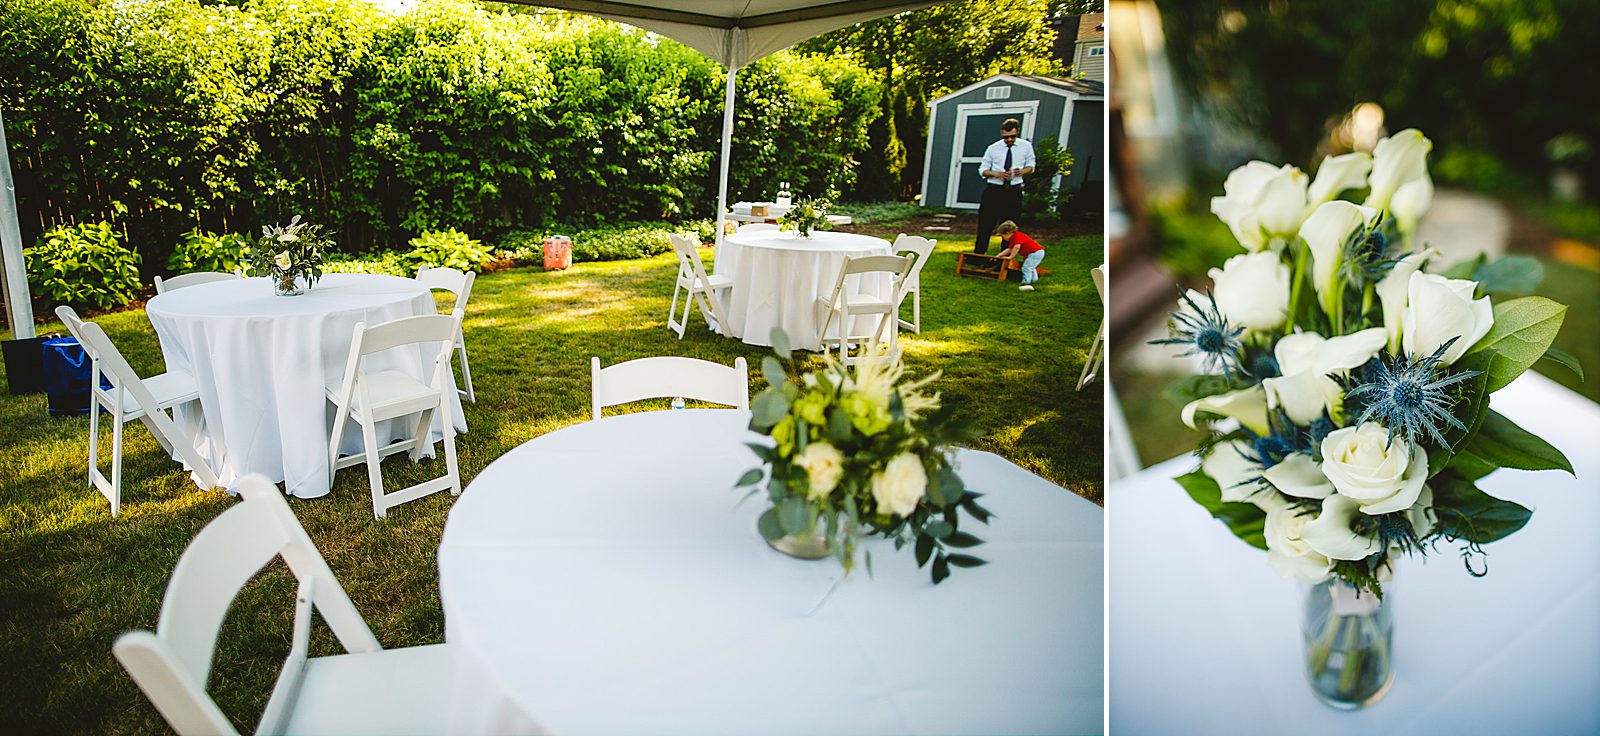 24 back yard wedding detail photos - Amazing Wedding in Backyard // Kristen + Jeff